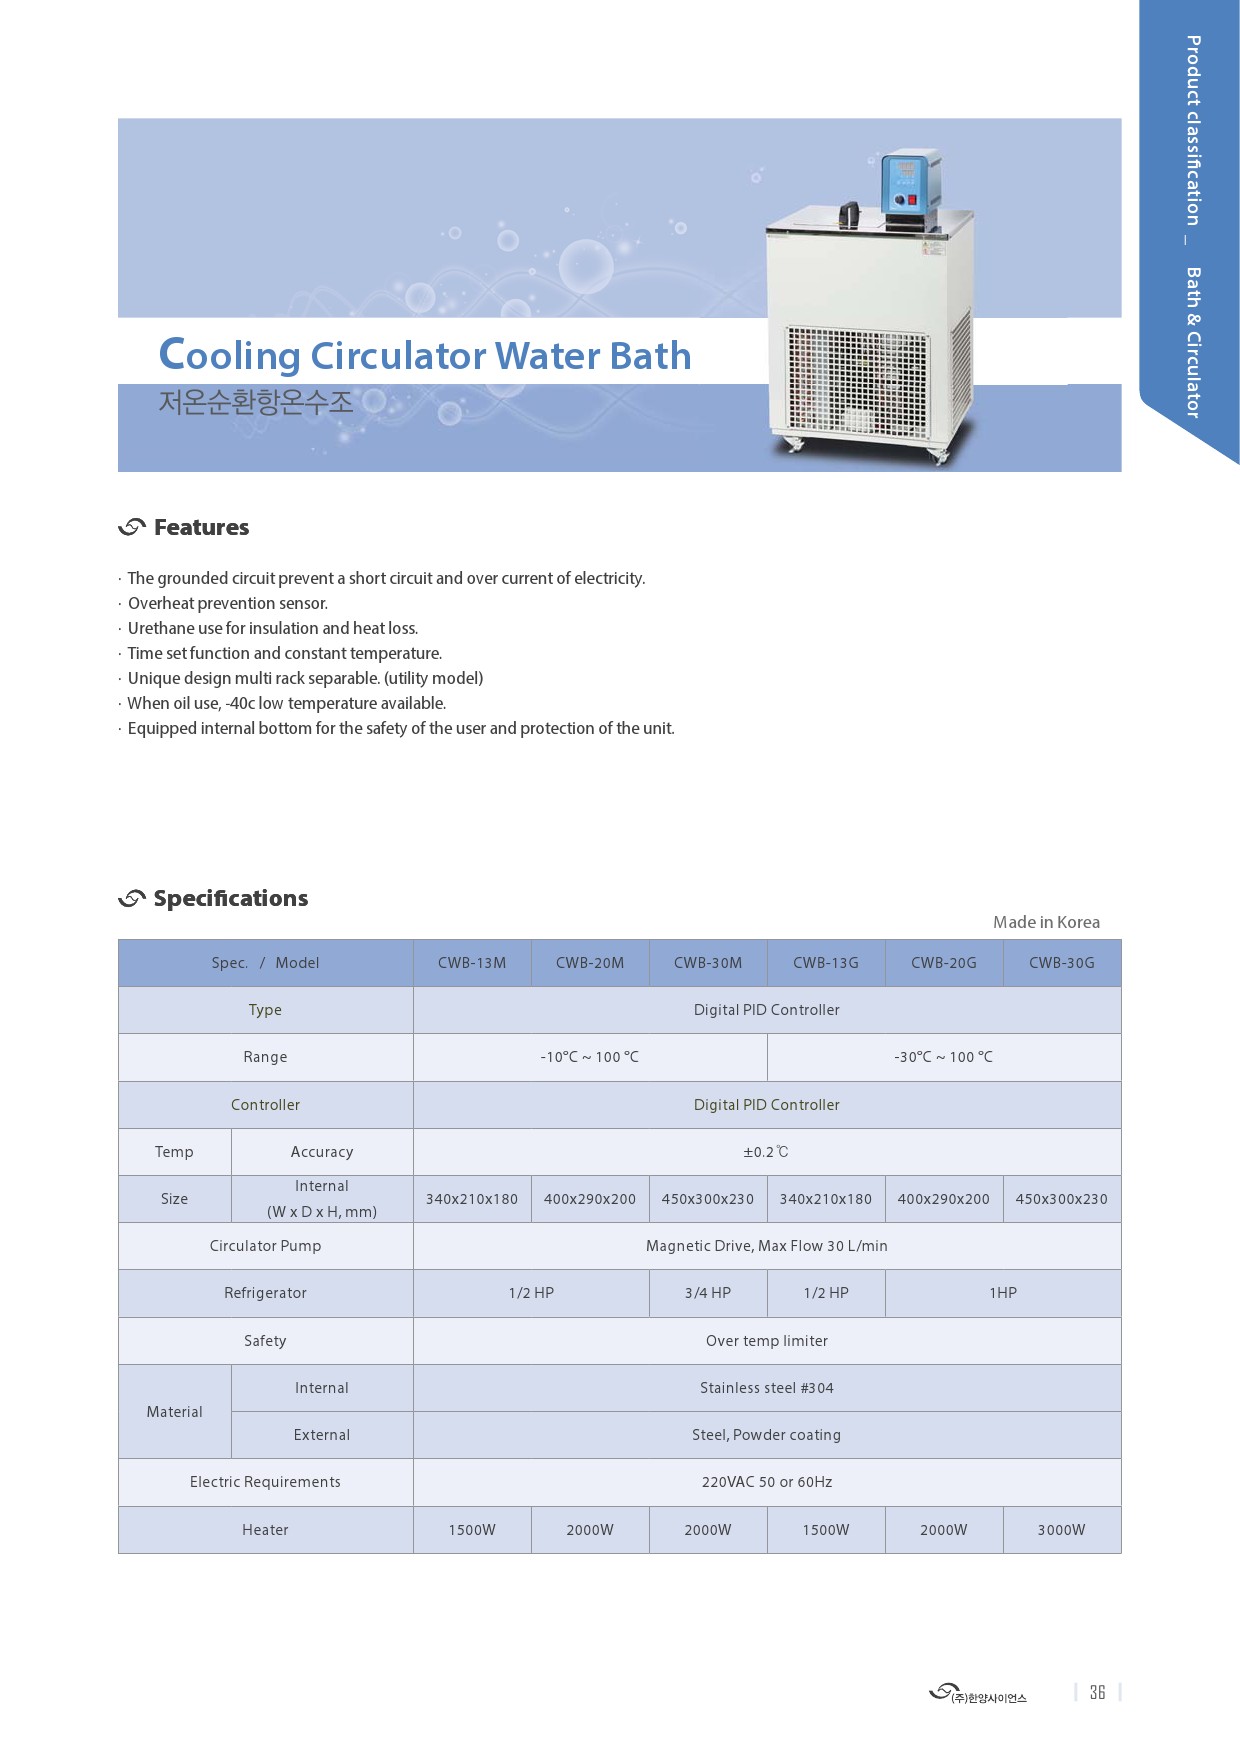 HYSC_Introduction_Cooling Circulator Water Bath-1.jpg